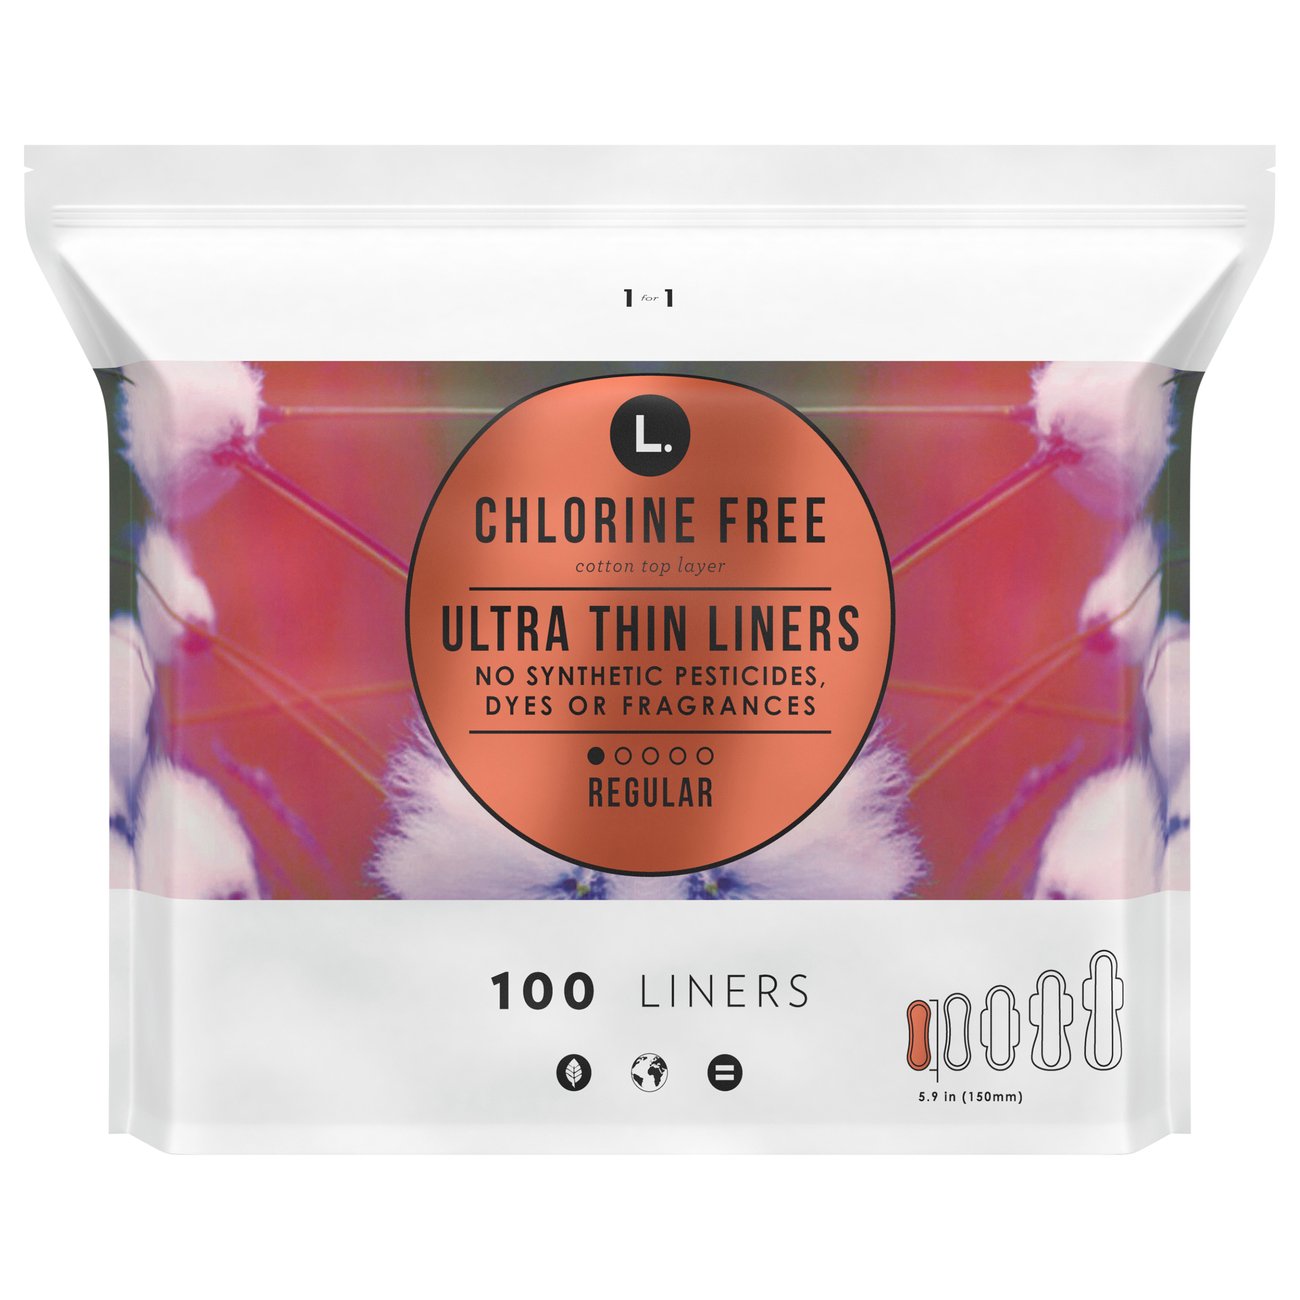 L. Chlorine Free Ultra Thin Liners Regular - Shop Pads & Liners at H-E-B